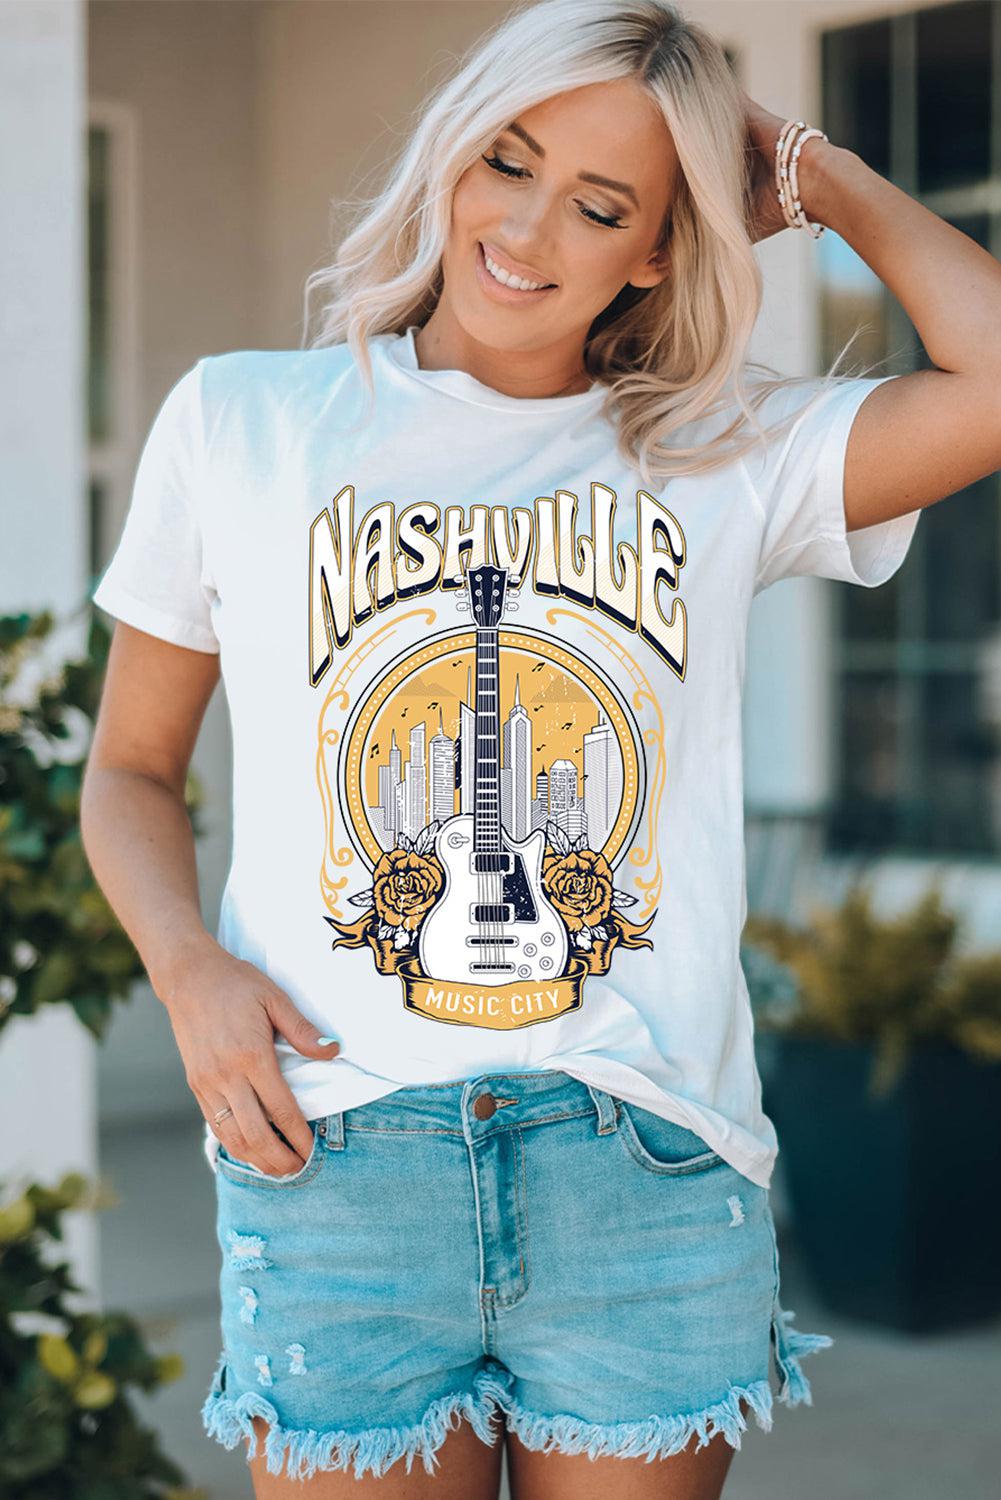 NASHVILLE MUSIC CITY Round Neck Tee Shirt BLUE ZONE PLANET